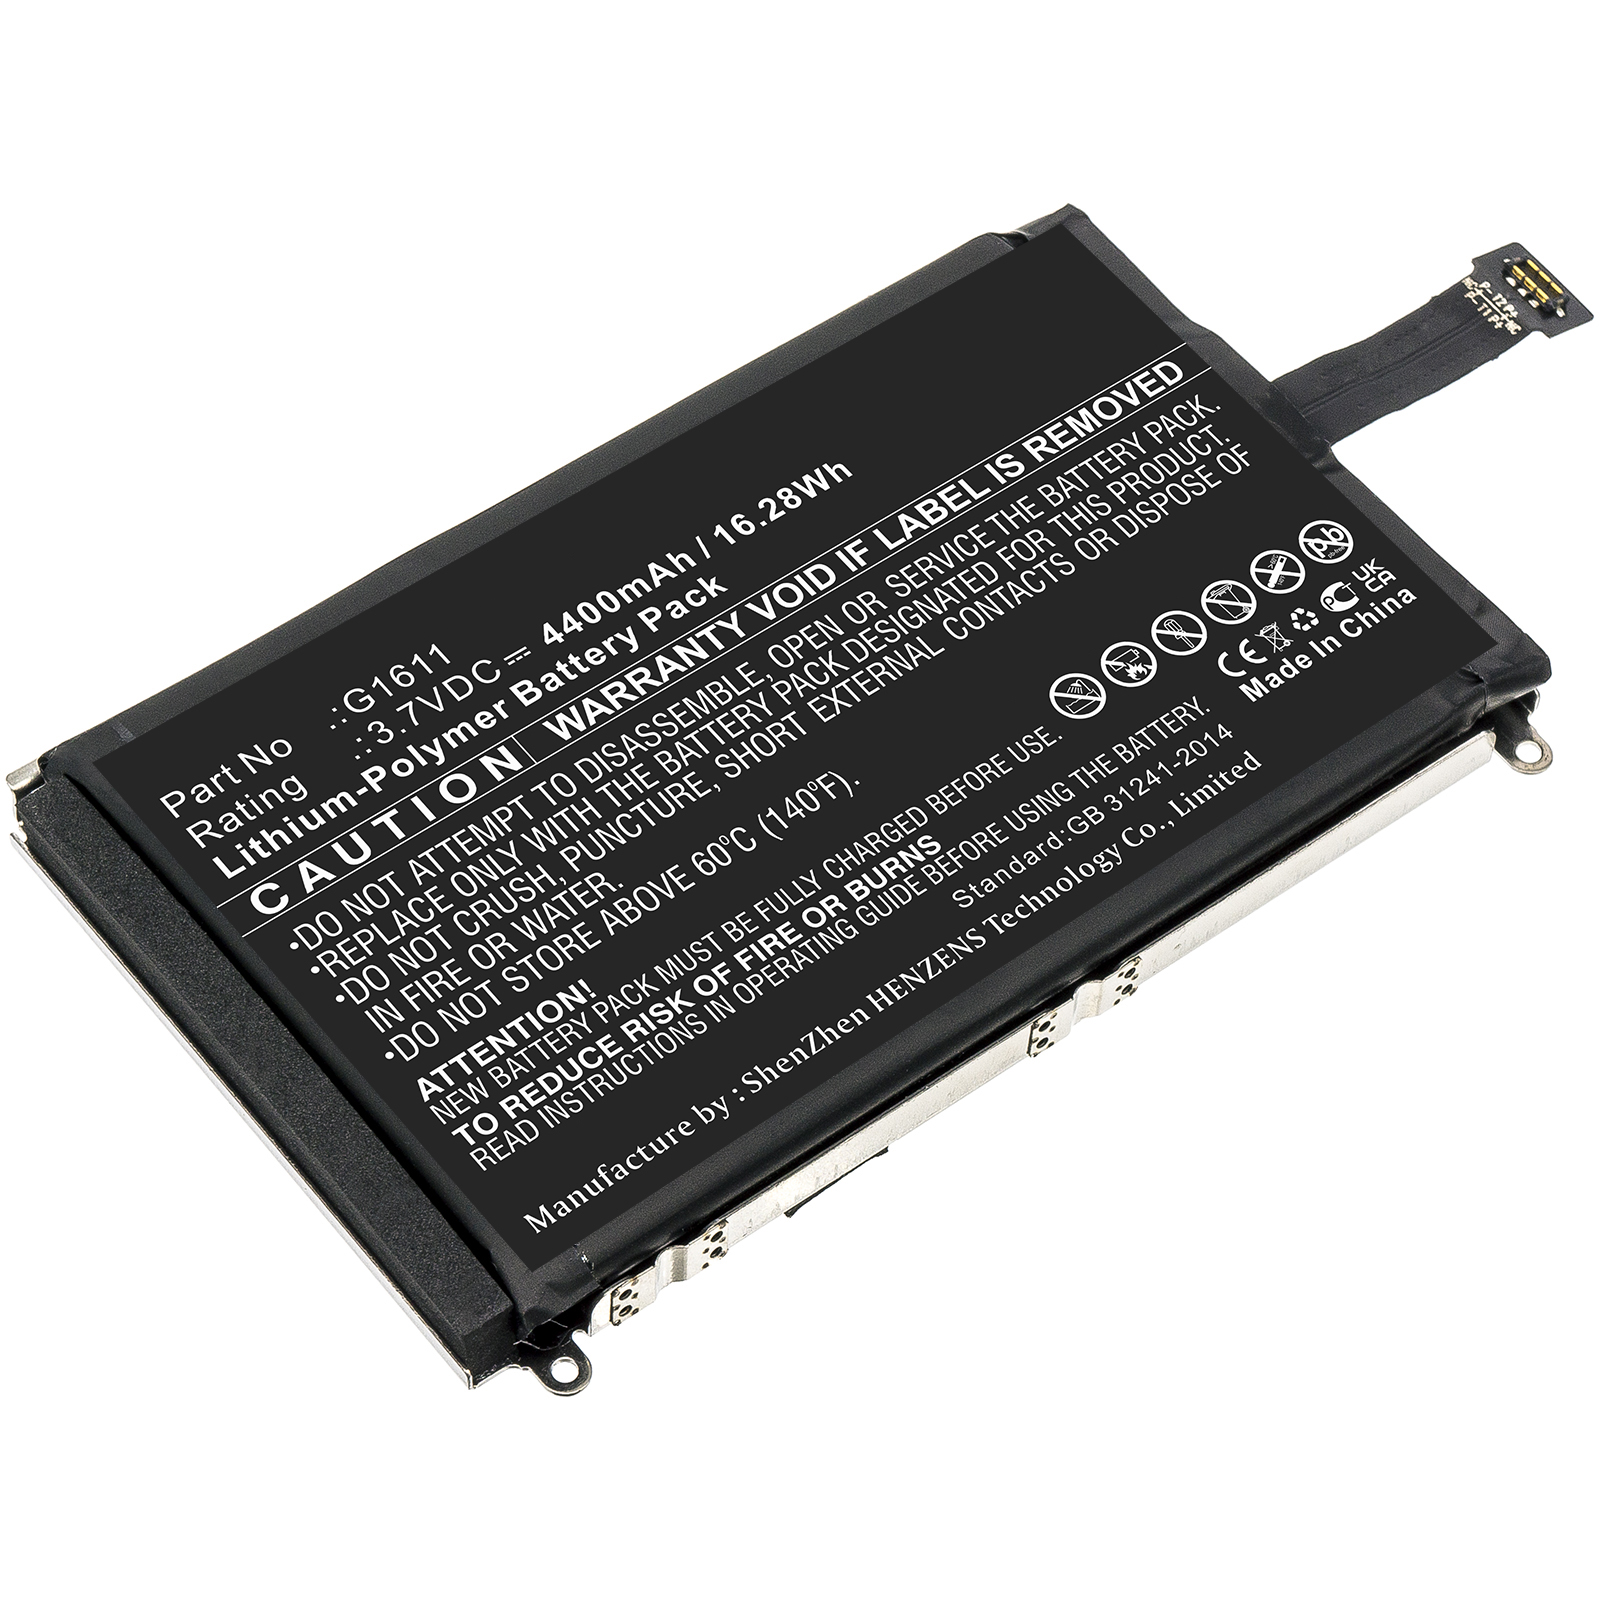 Synergy Digital Wifi Hotspot Battery, Compatible with GlocalMe G1611 Wifi Hotspot Battery (Li-Pol, 3.7V, 4400mAh)